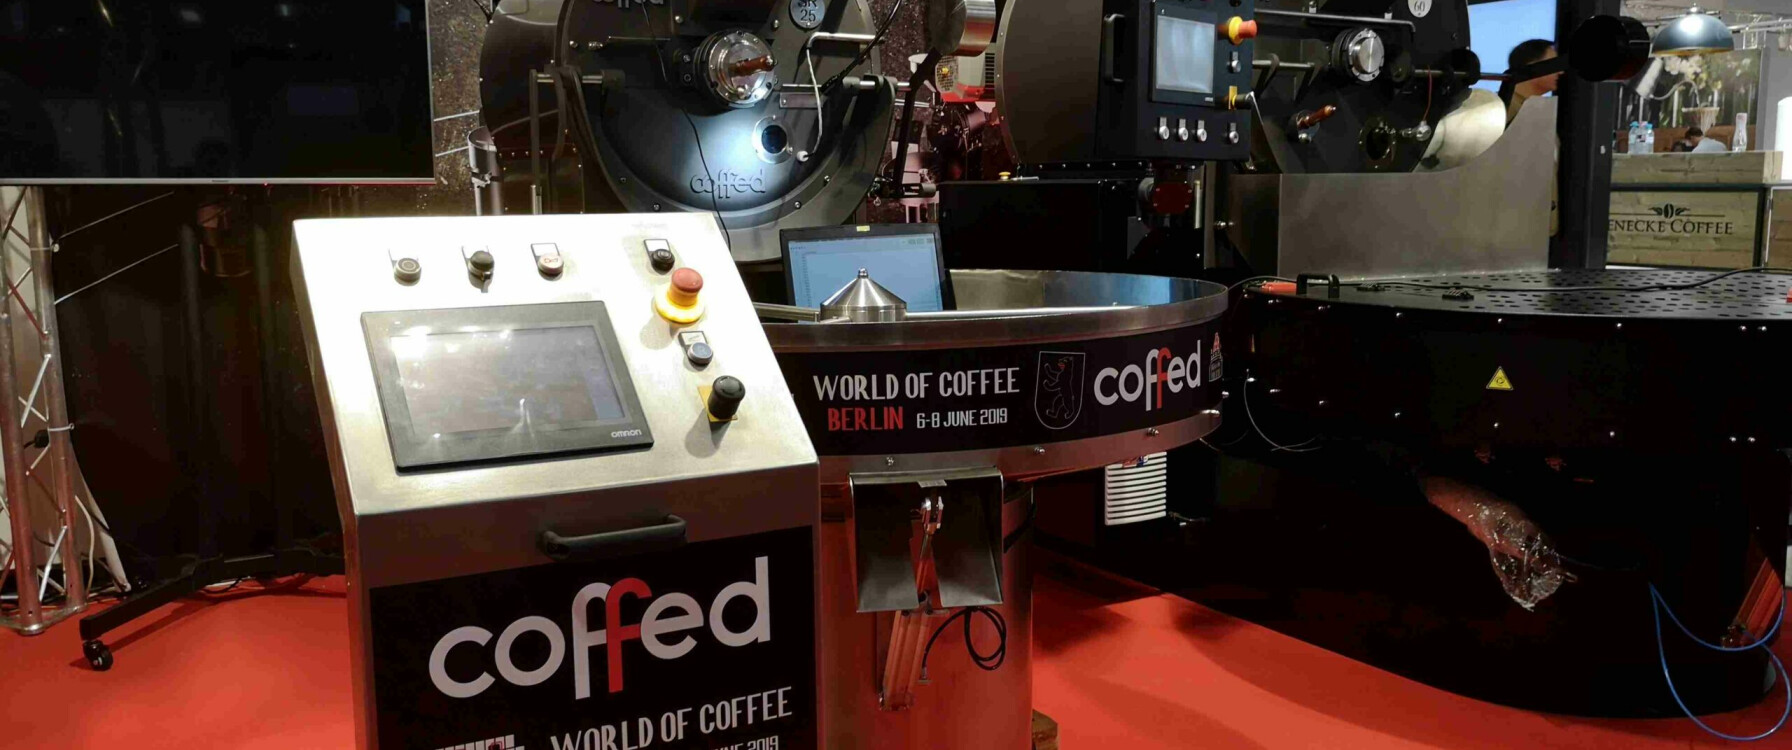 World of Coffee 2019